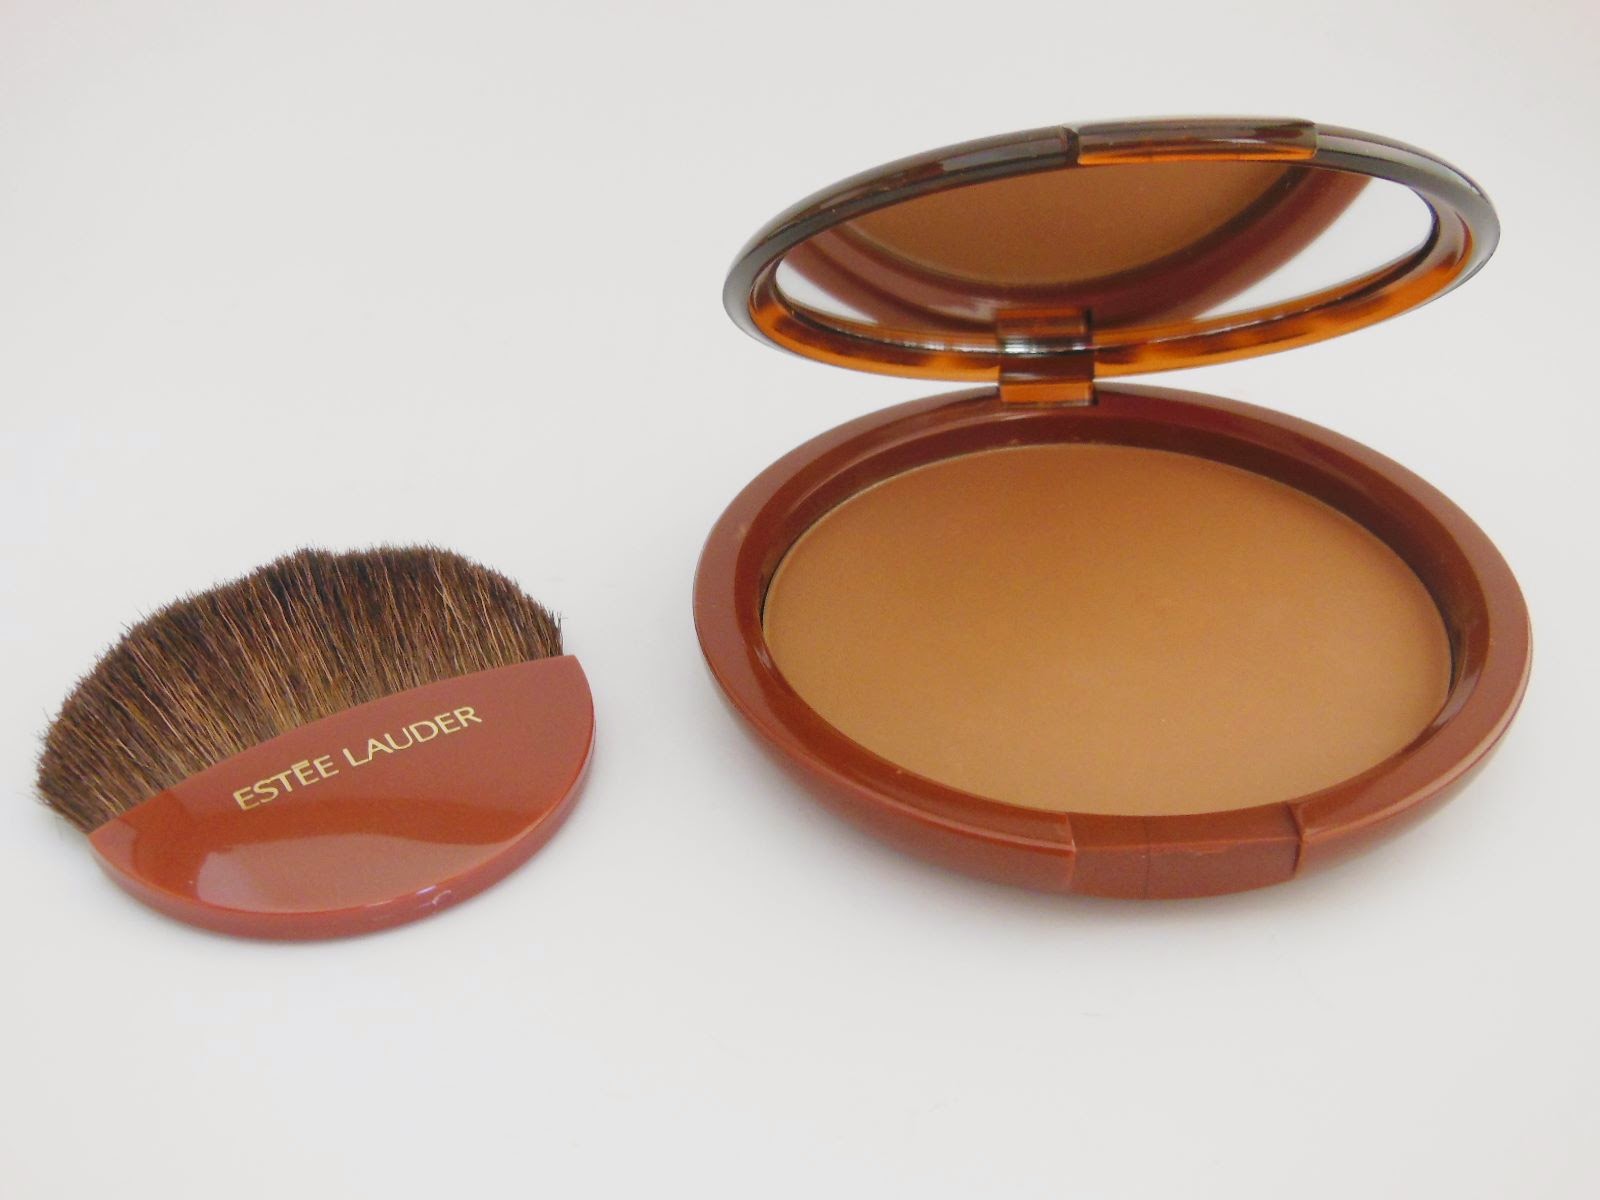 Product Estee Lauder Bronze Powder | The Beauty & Lifestyle Hunter